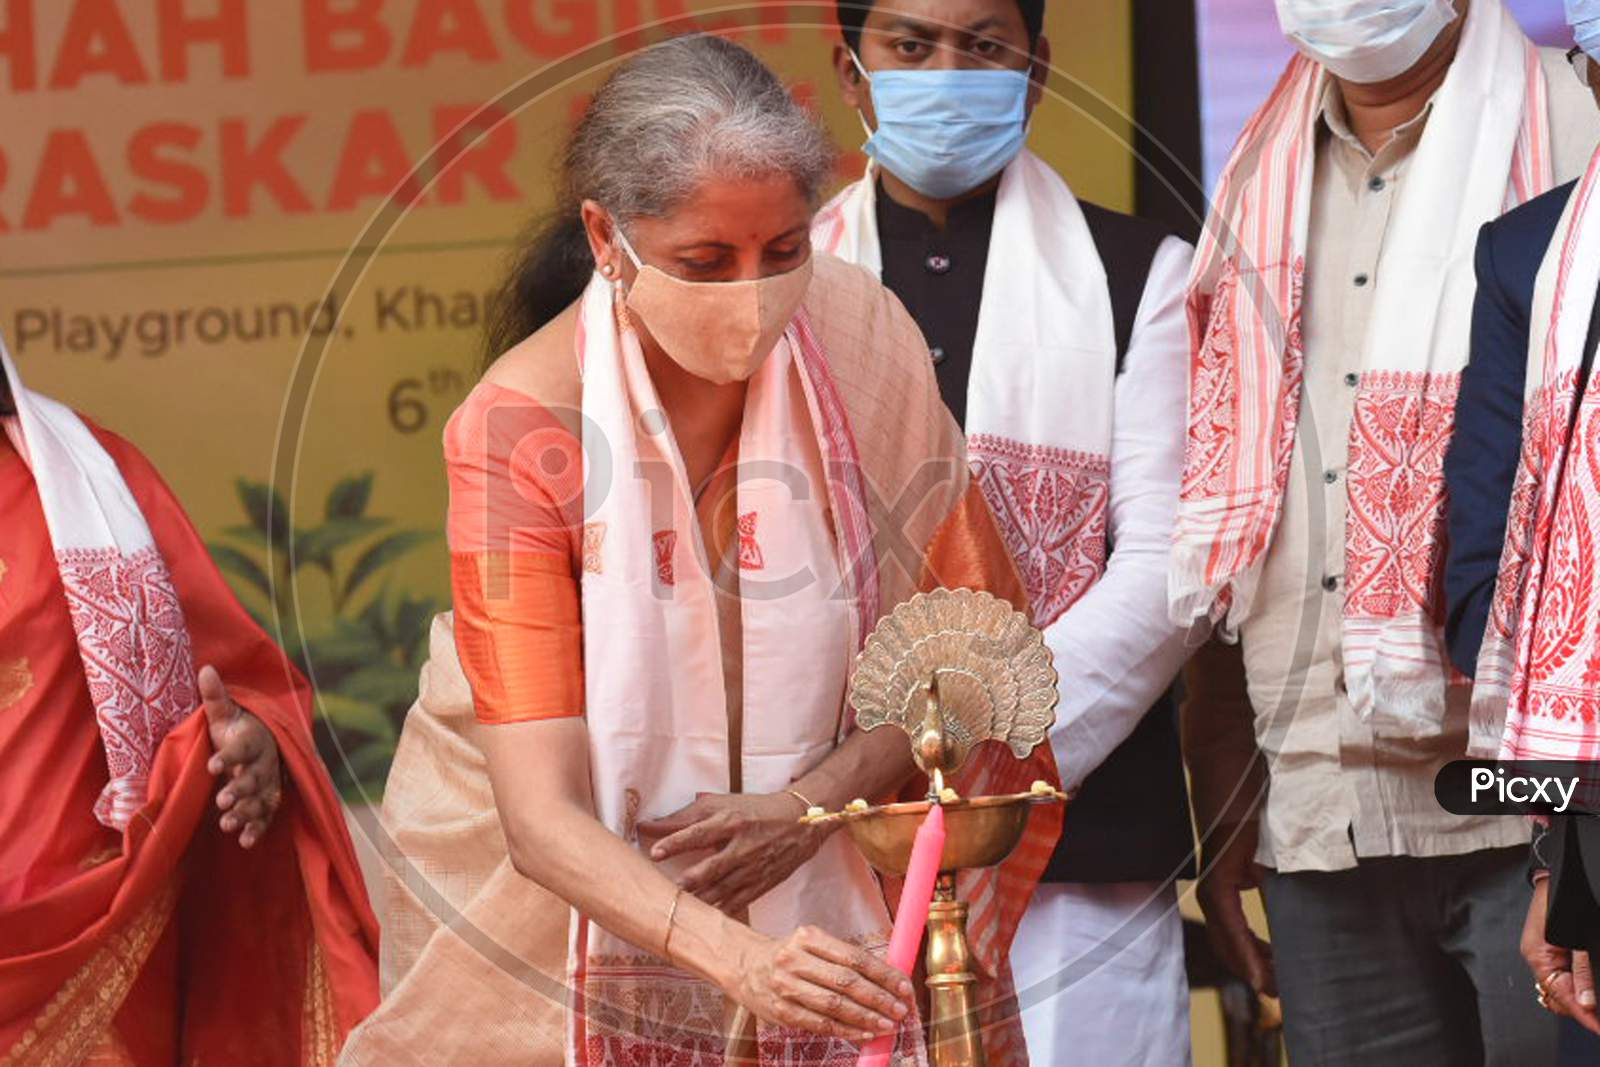 Union Finance Minister Nirmala Sitharaman light the lamp launches Chah Bagicha Dhan Puraskar Scheme during the public meeting at Khanapara Veterinary Ground in Guwahati on Saturday, 06 February 2021